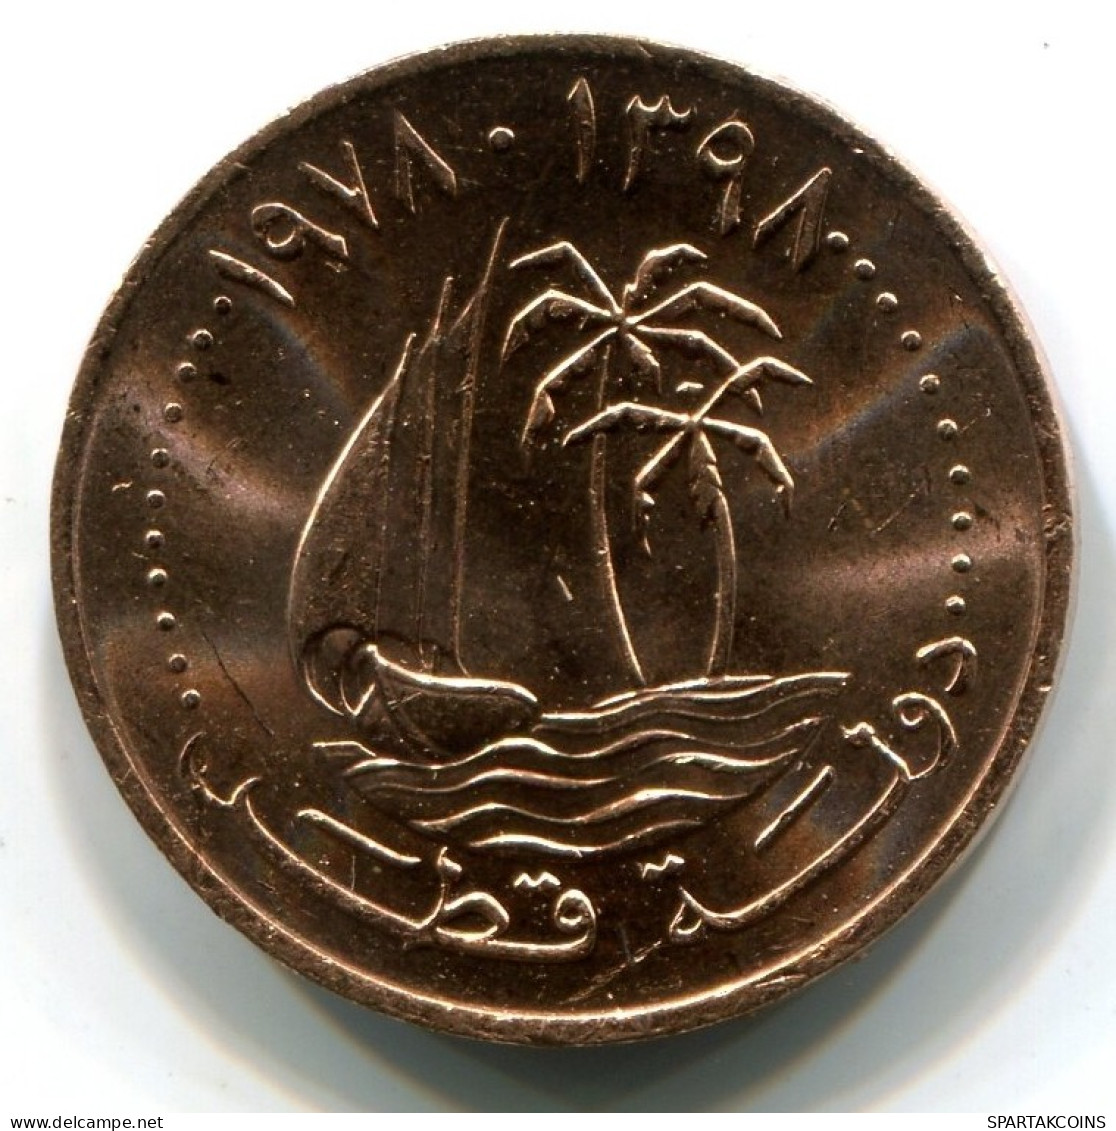 5 DIRHAMS 1978 QATAR UNC Islamic Coin #W11171.U.A - Qatar